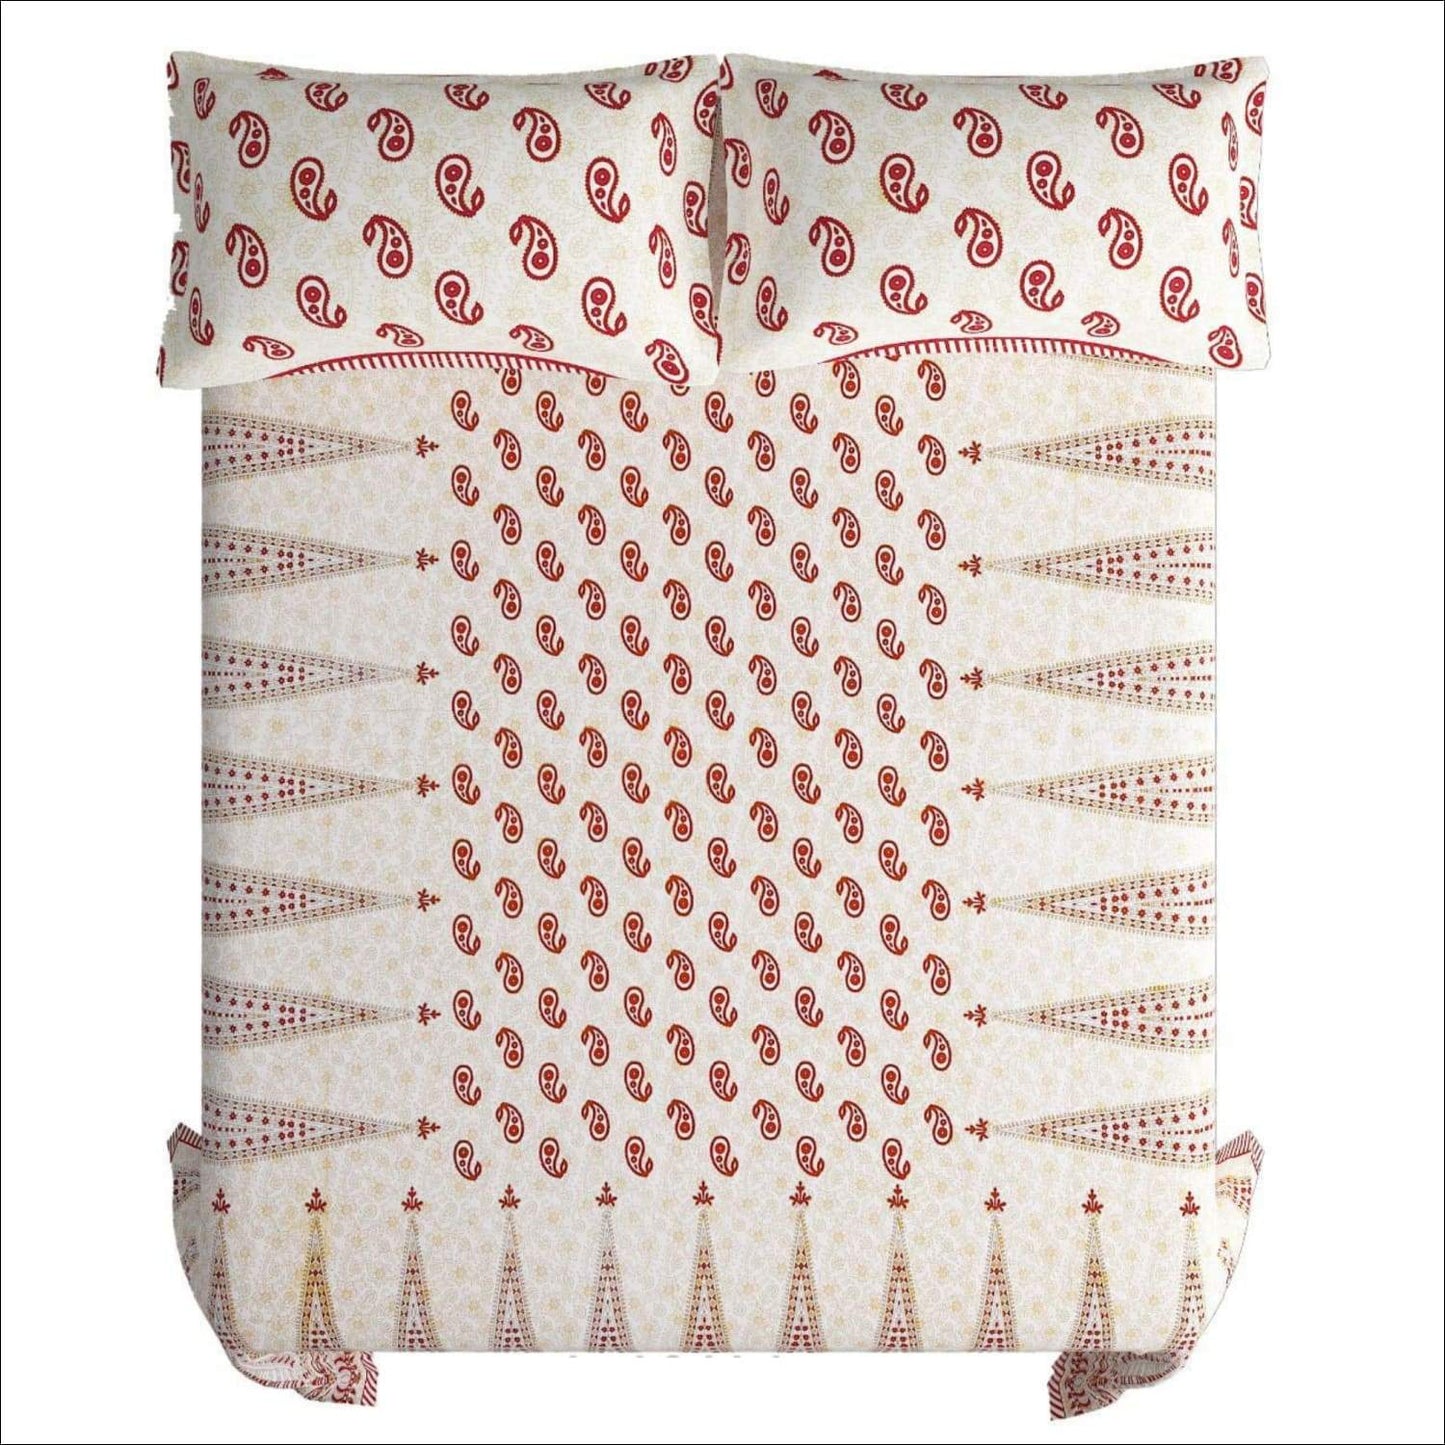 Royal Red Cotton Jaipuri Bedsheet (Double bed)